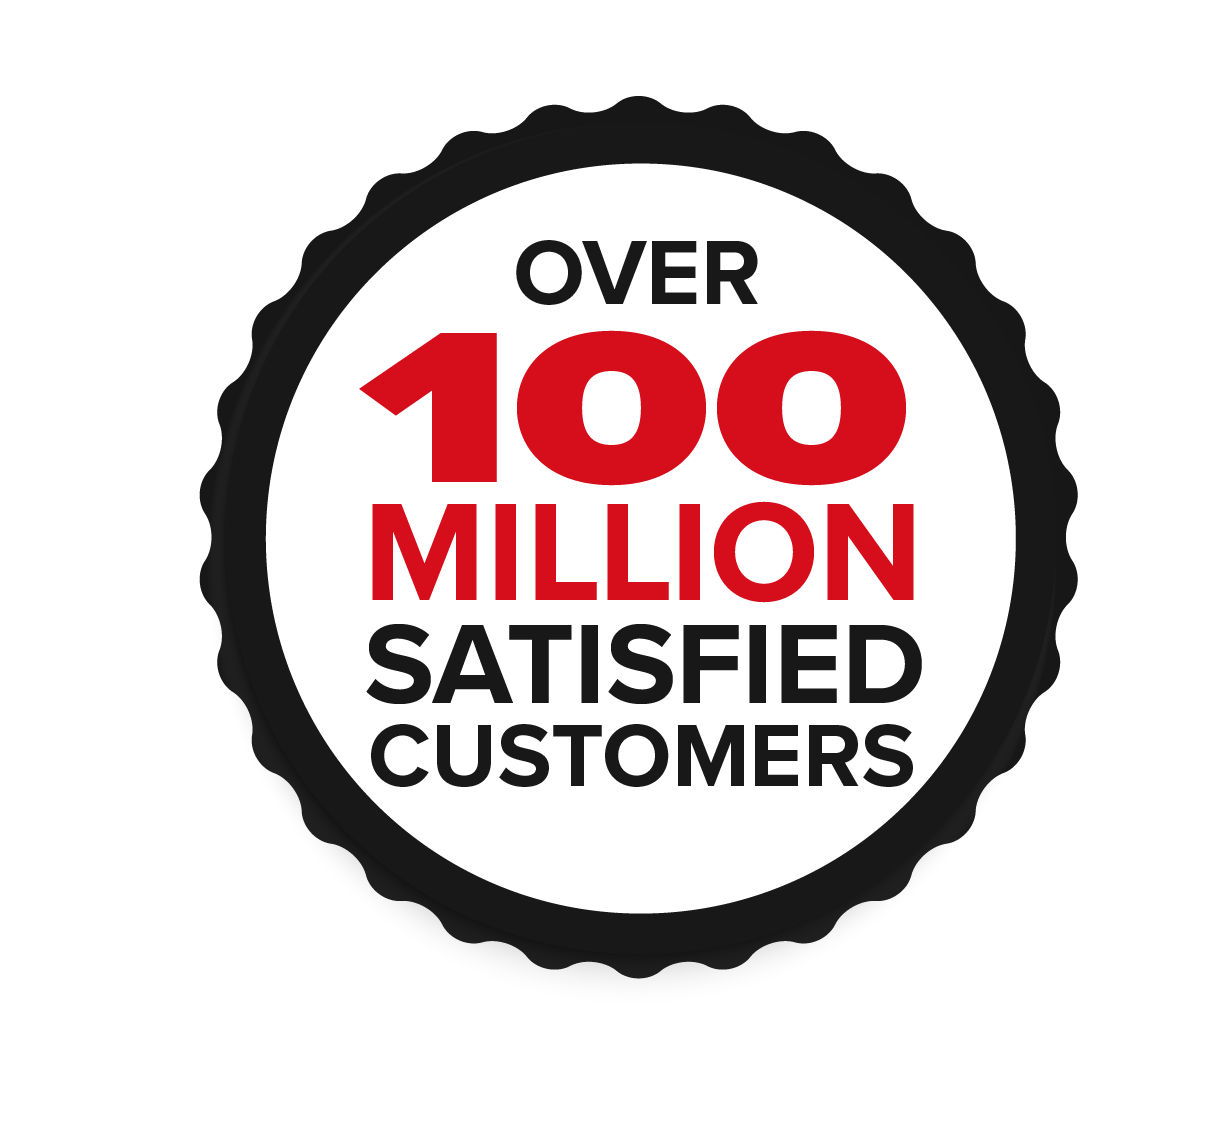 Over 100 Million Satisfied Customers